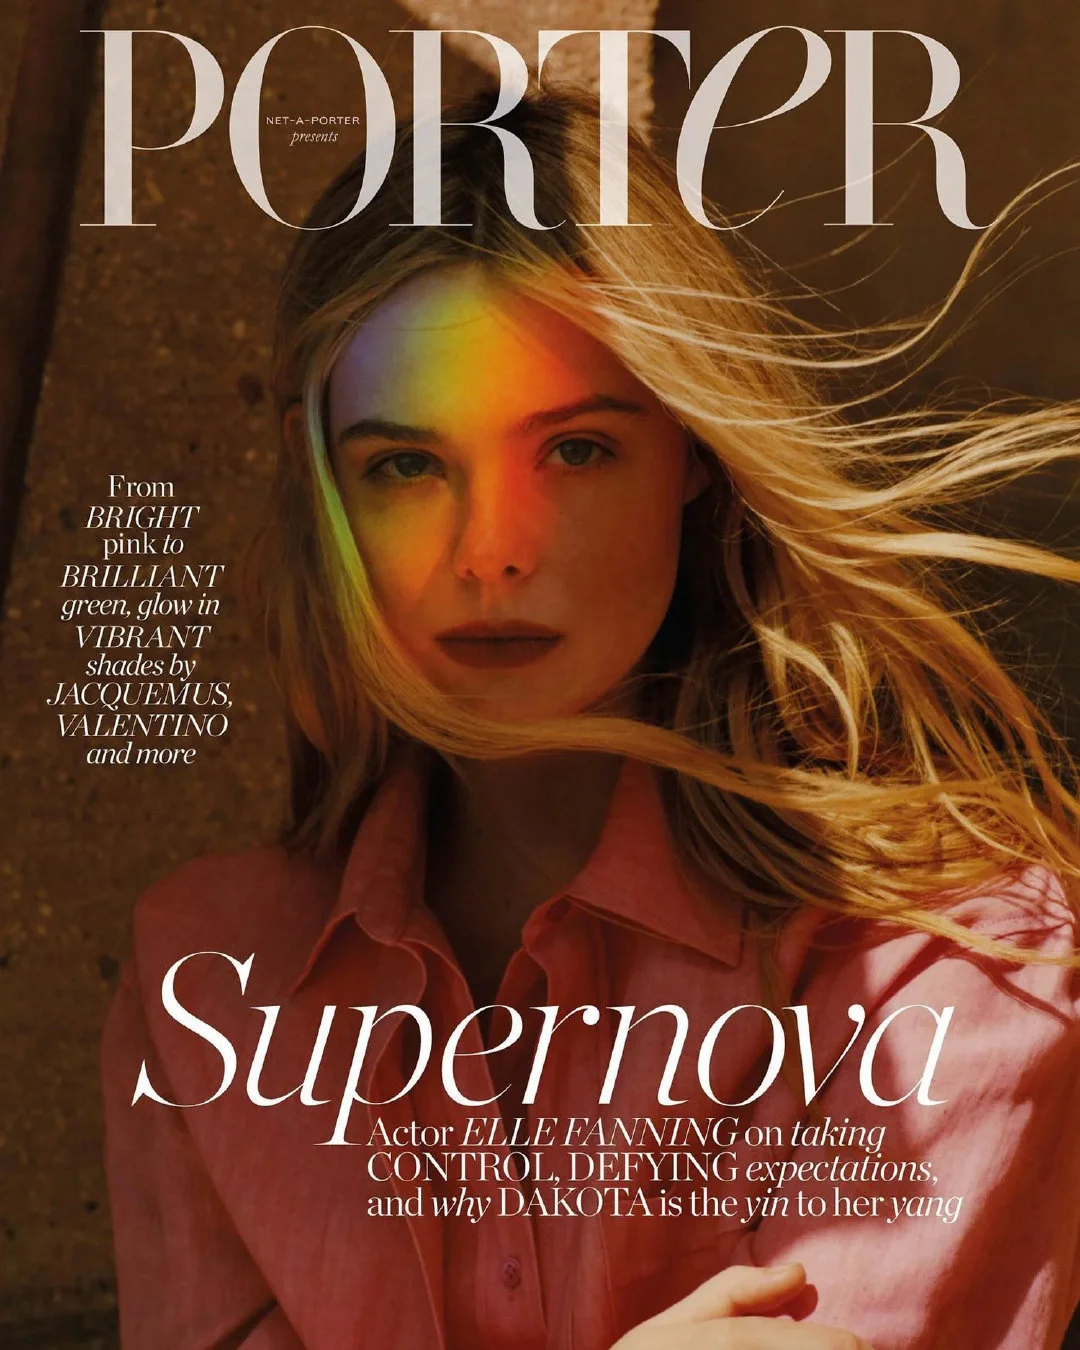 Elle Fanning, "Porter" magazine April photo